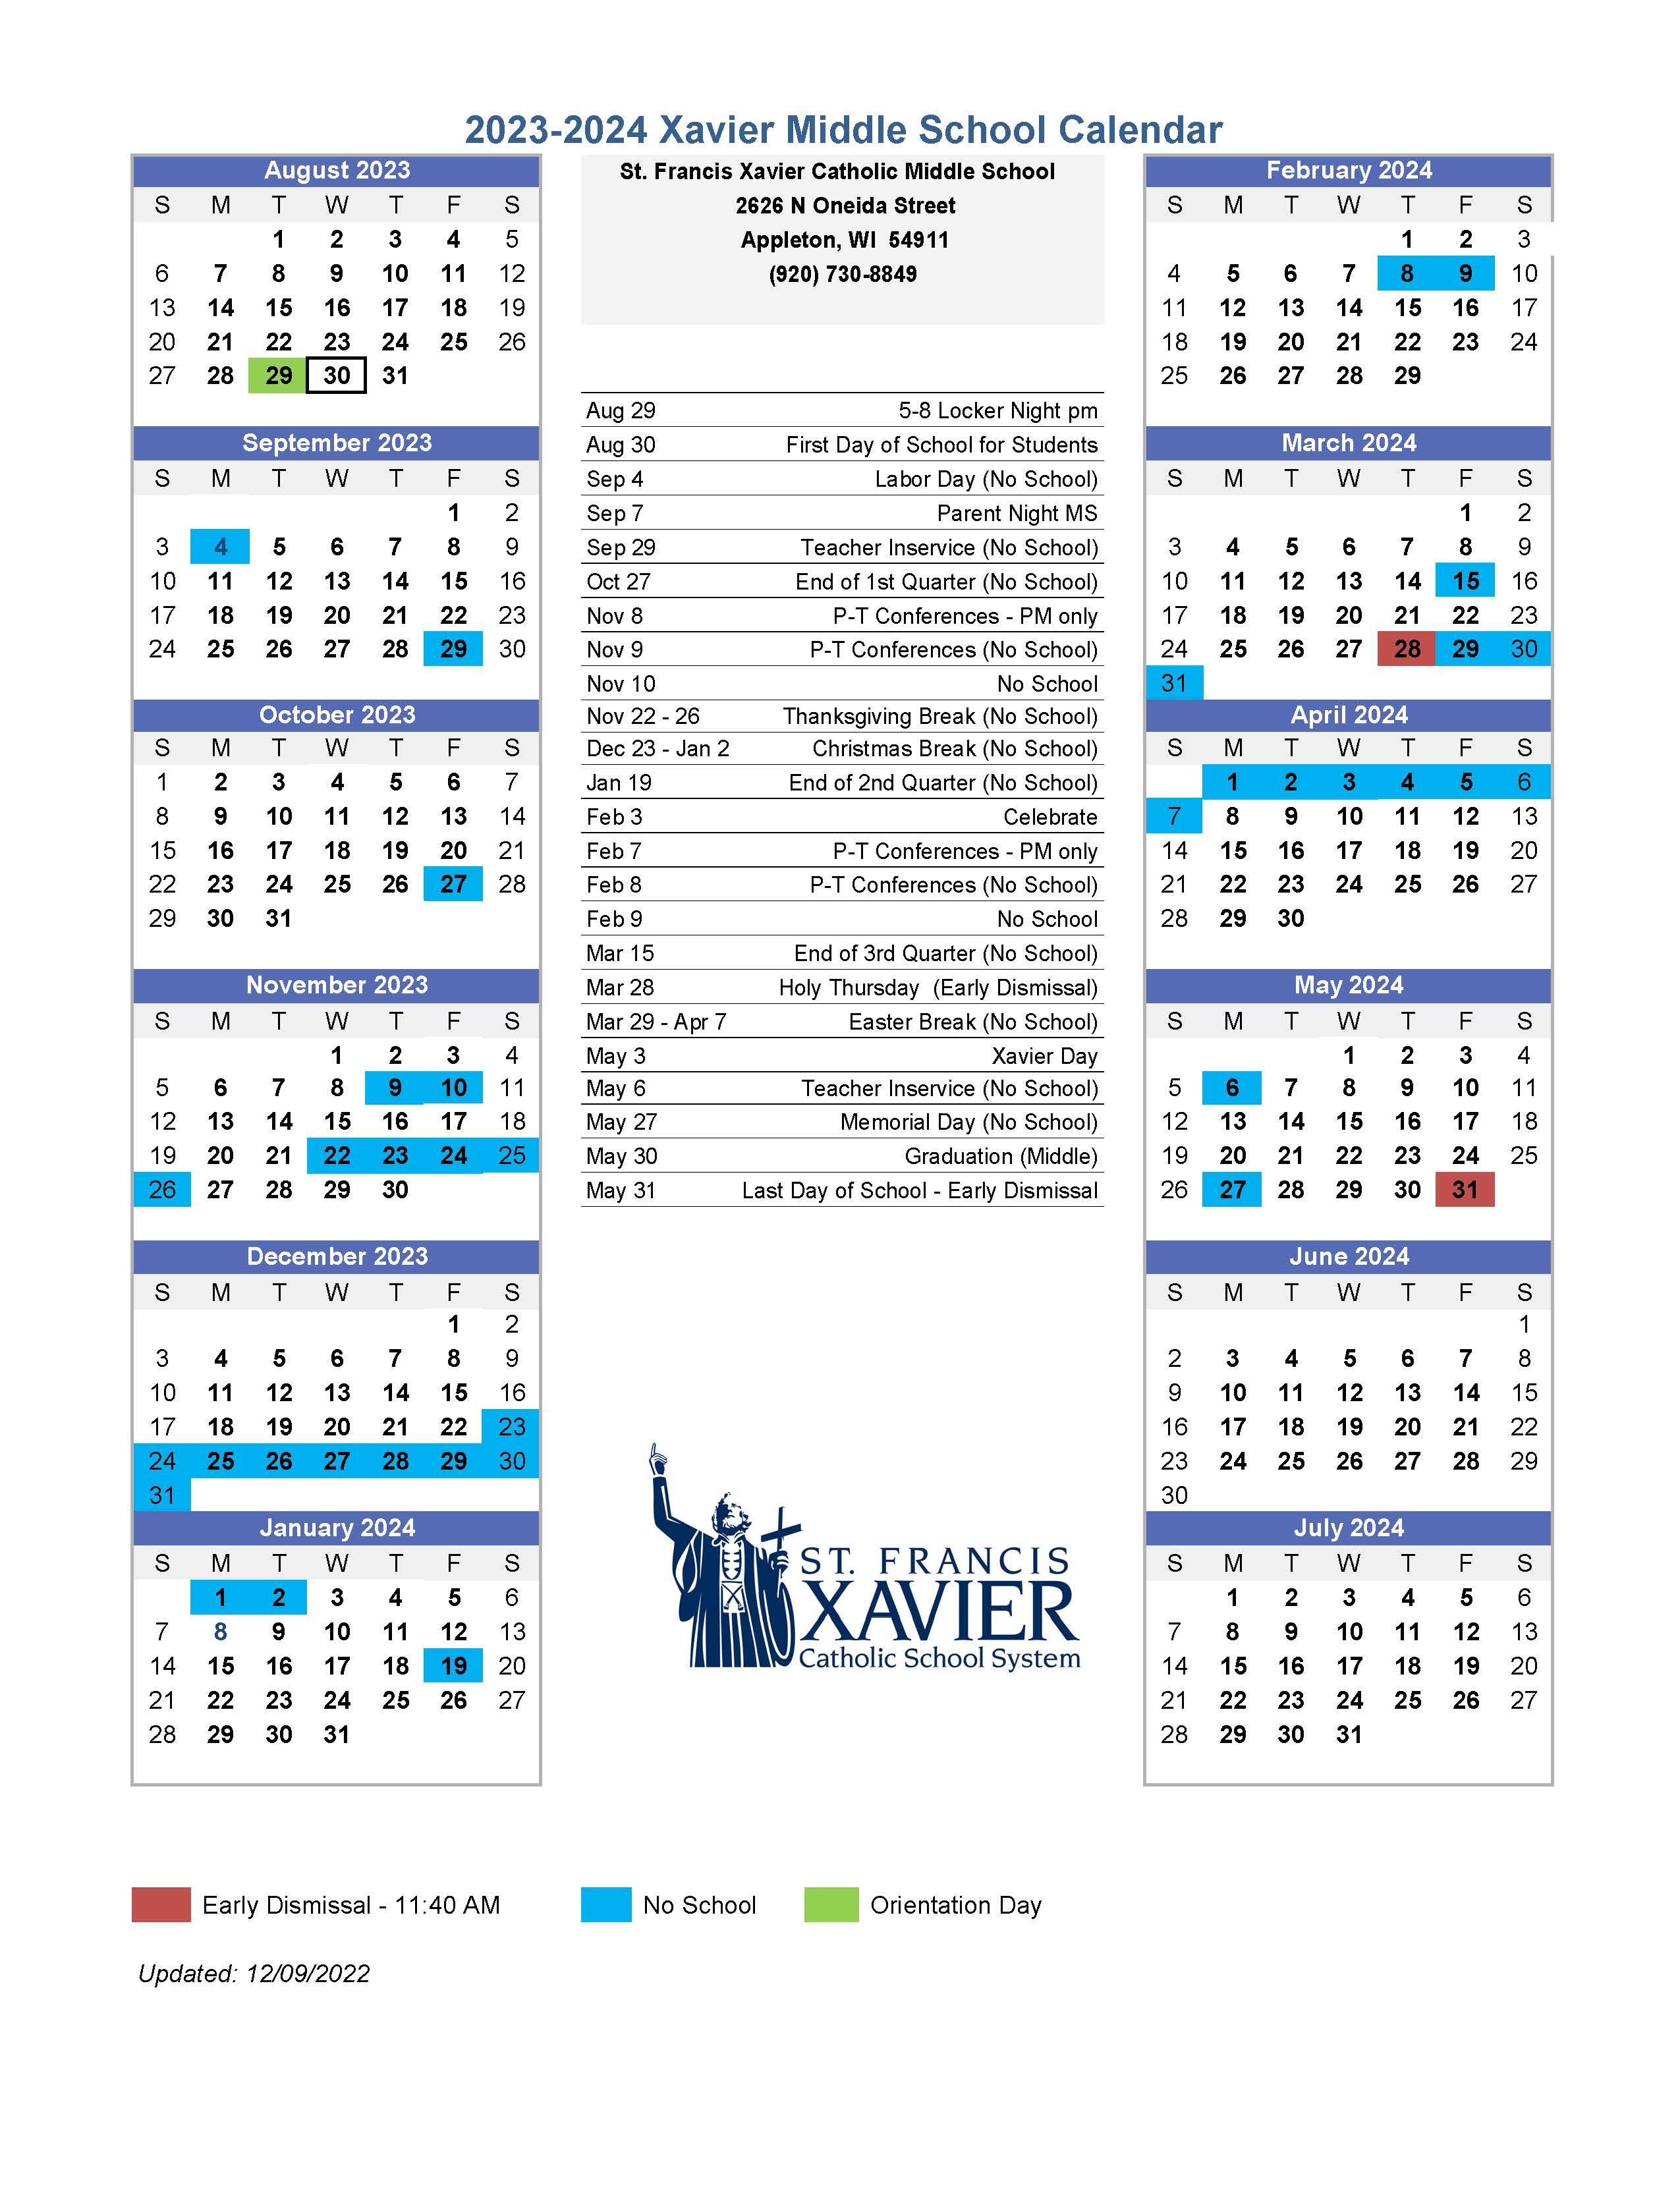 Xavier Middle School 2023-2024 Academic Calendar